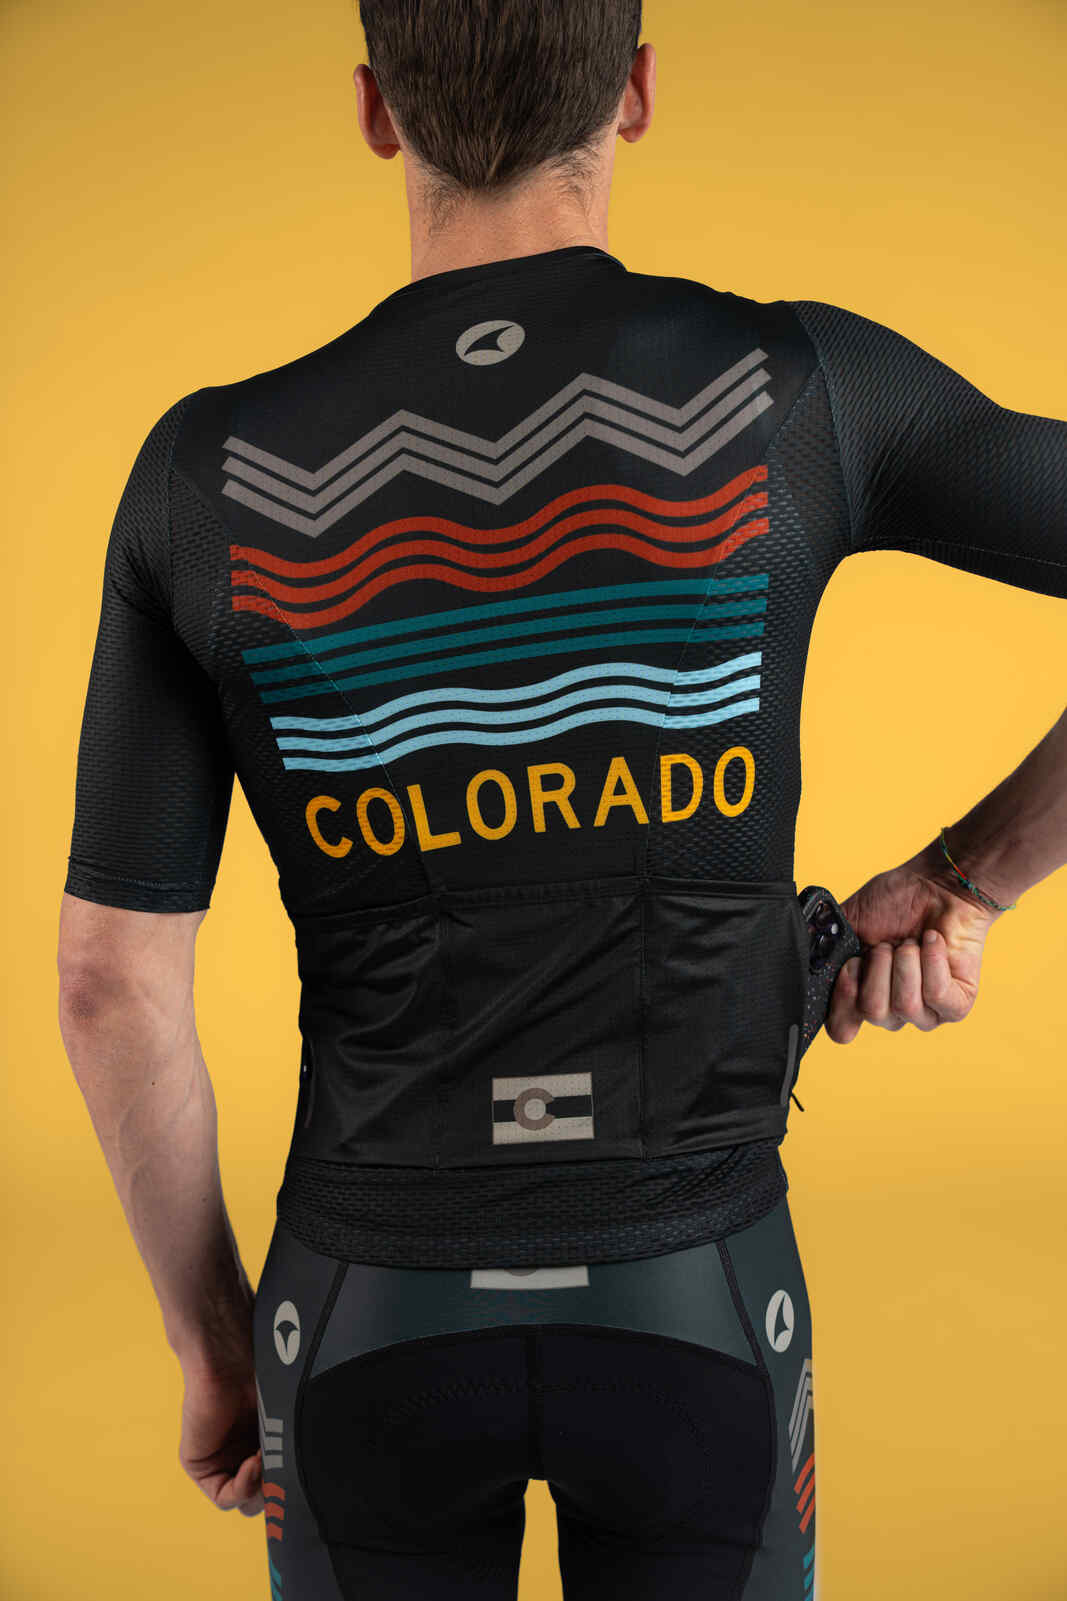 Men's Navy Blue Colorado Mesh Cycling Jersey - Zippered Valuables Pocket